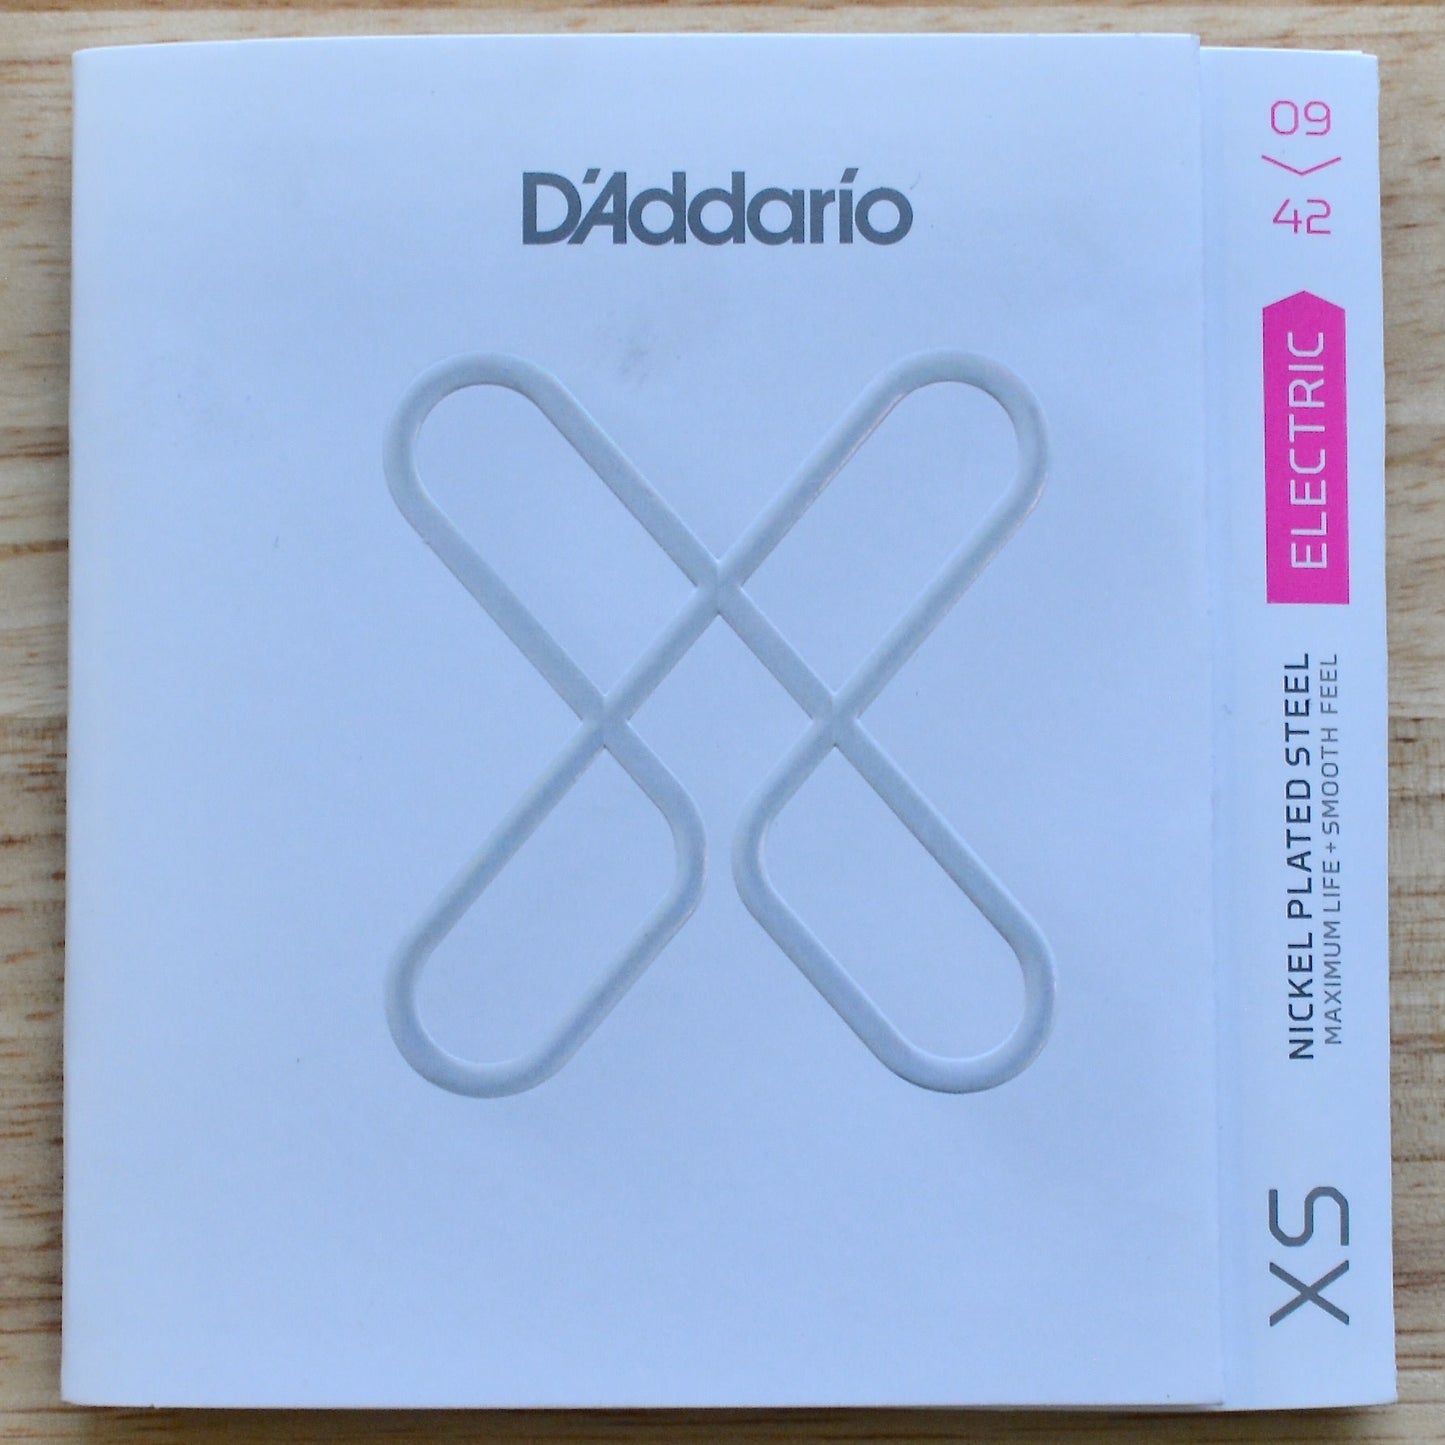 D'Addario XS Nickel Electic Strings Superlight 9-42